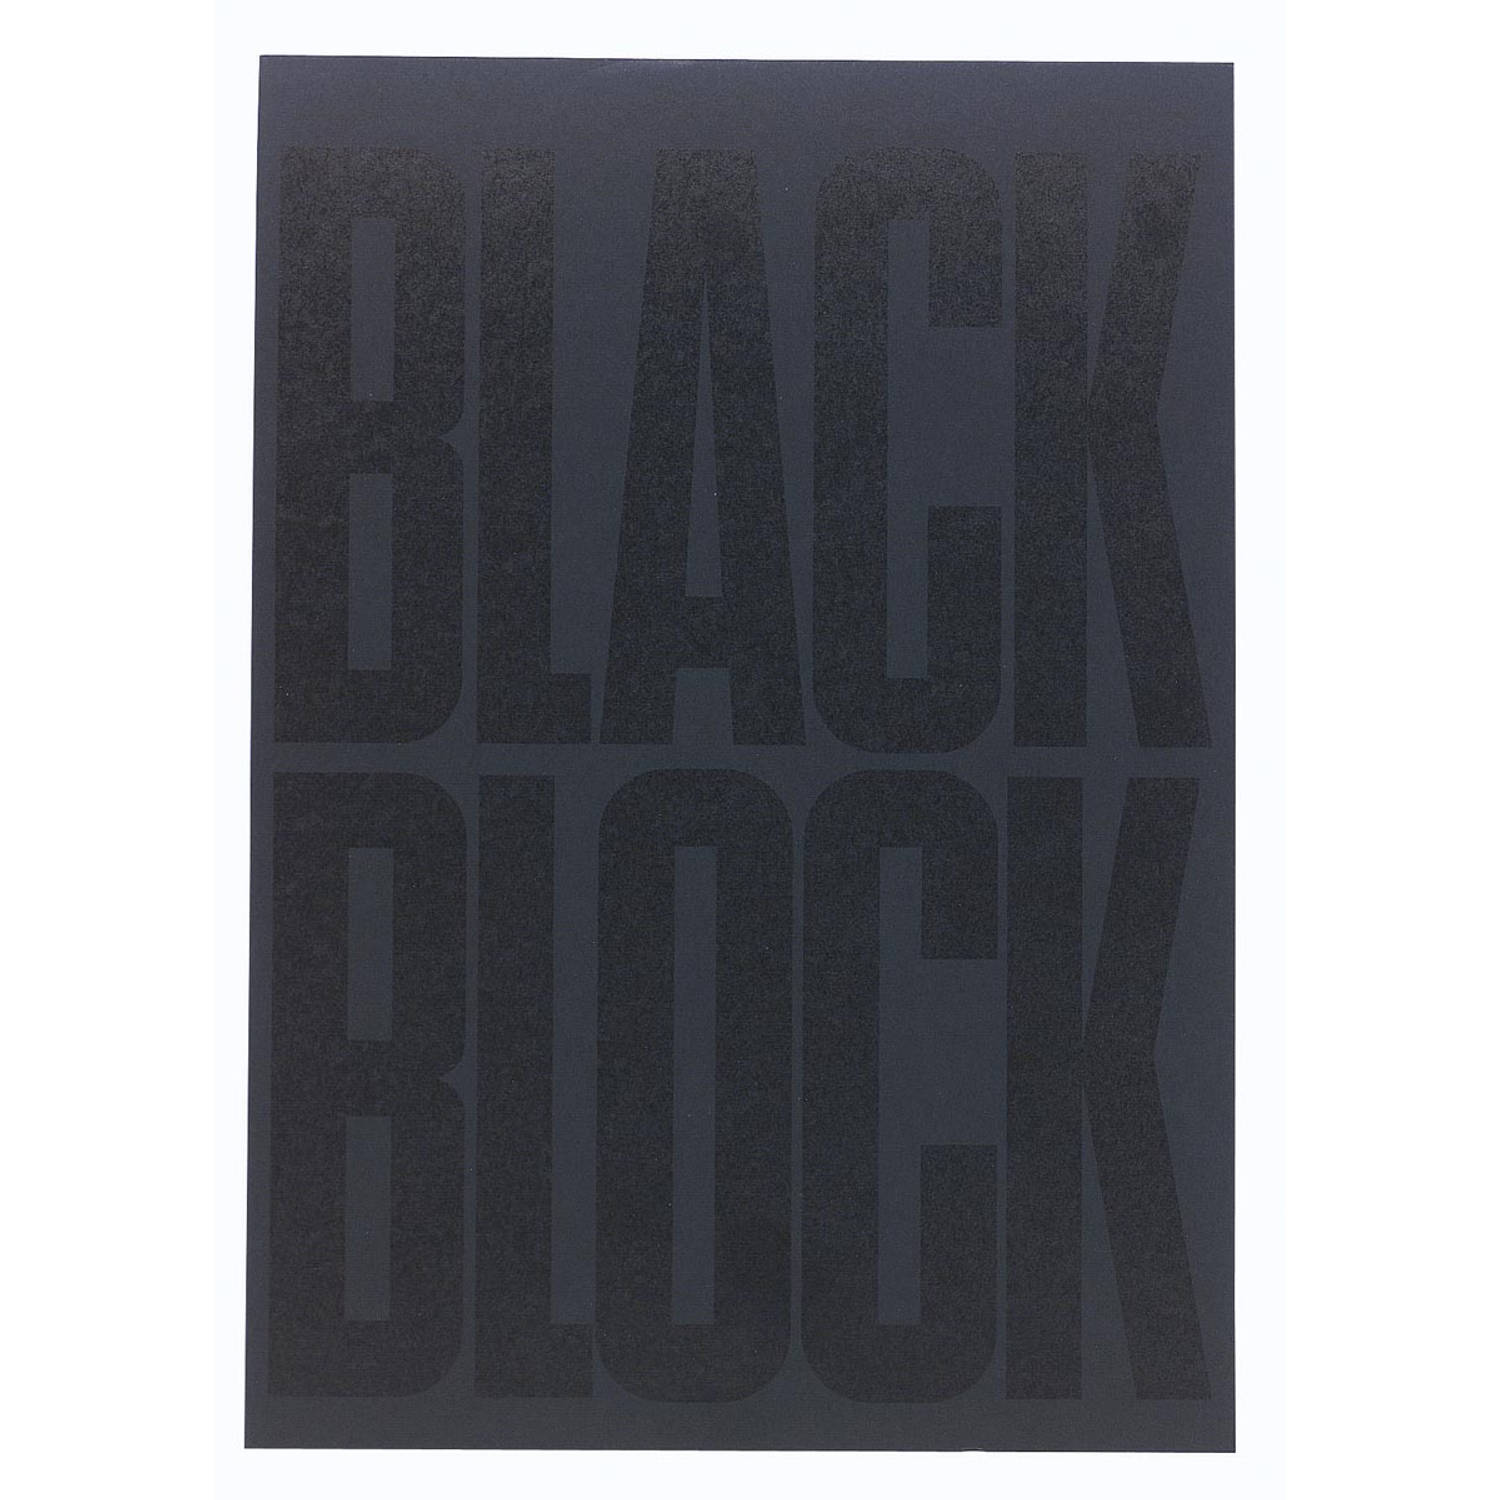 Schrijfblok Black Block 29,7x21cm geel papier geruit 5x5 70 bladen (5700E)